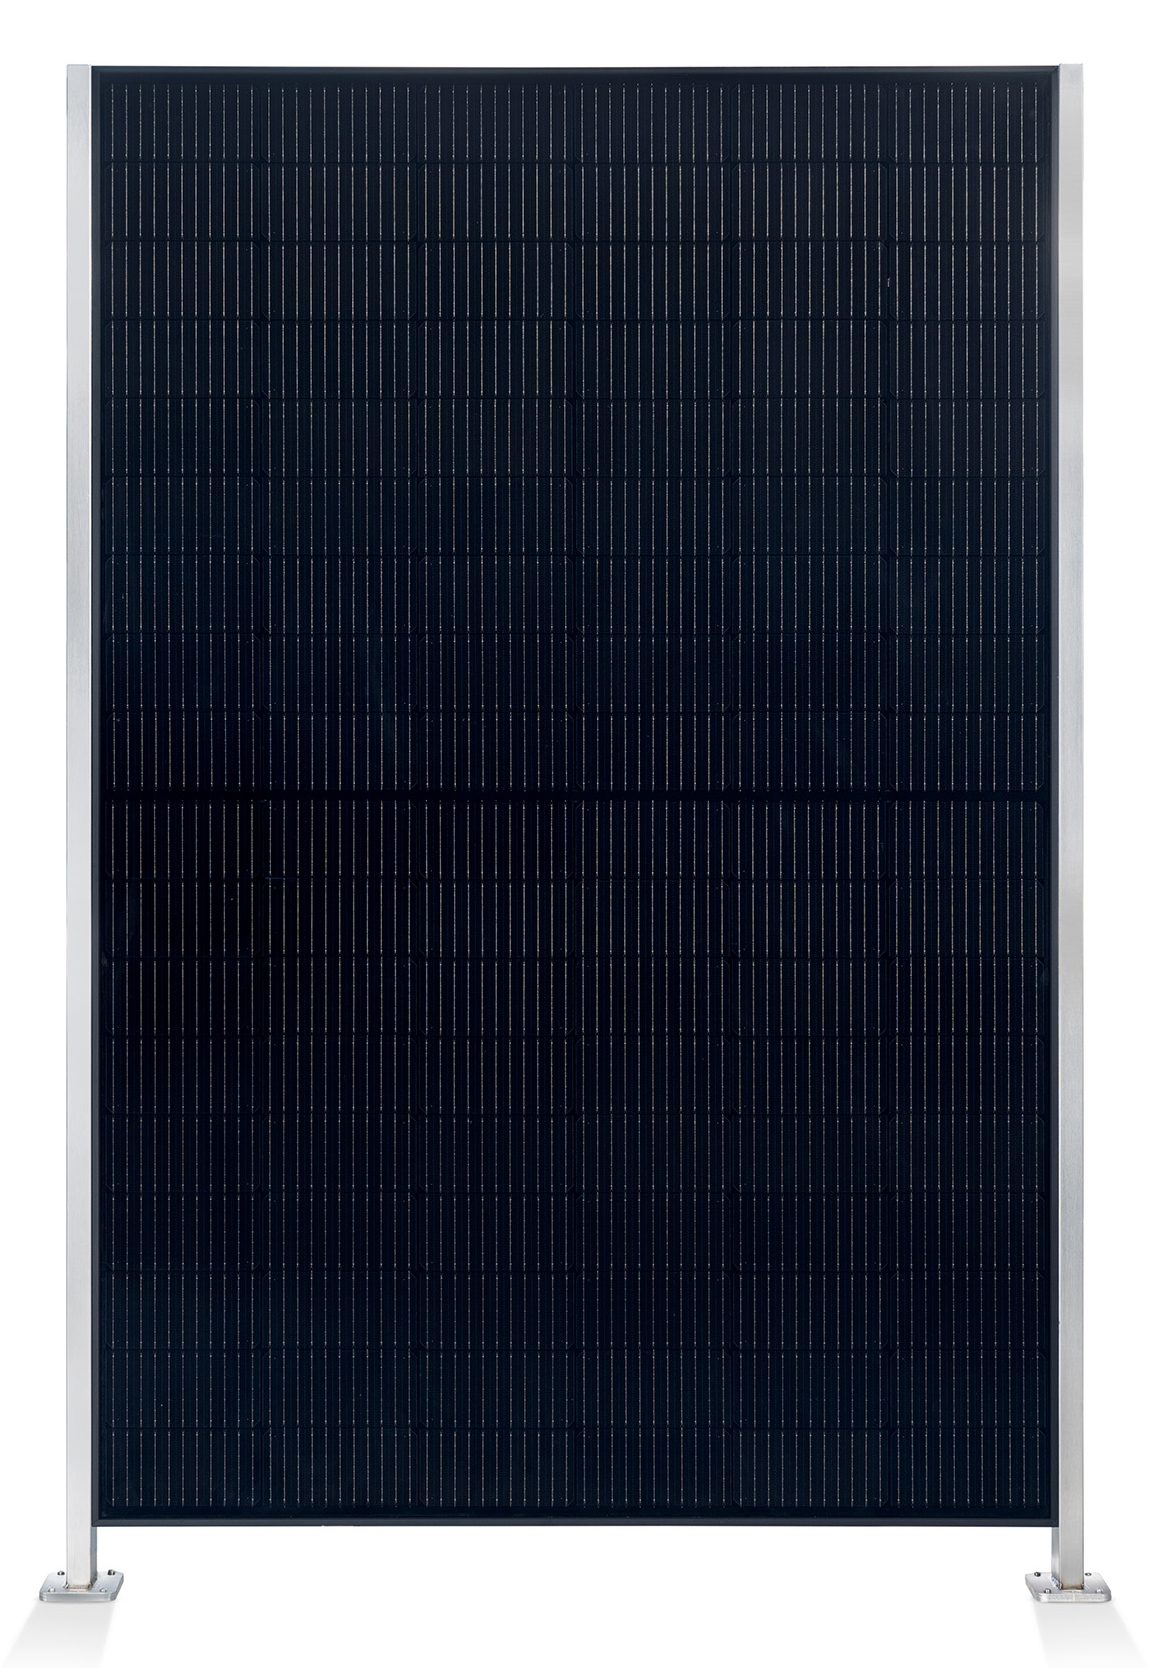 ausschnitt_0005_element-solar-sichtschutz-pv-photovoltaik-zaun-collection-hutter-panel-schwarz-pfosten-edelstahl-front.jpg